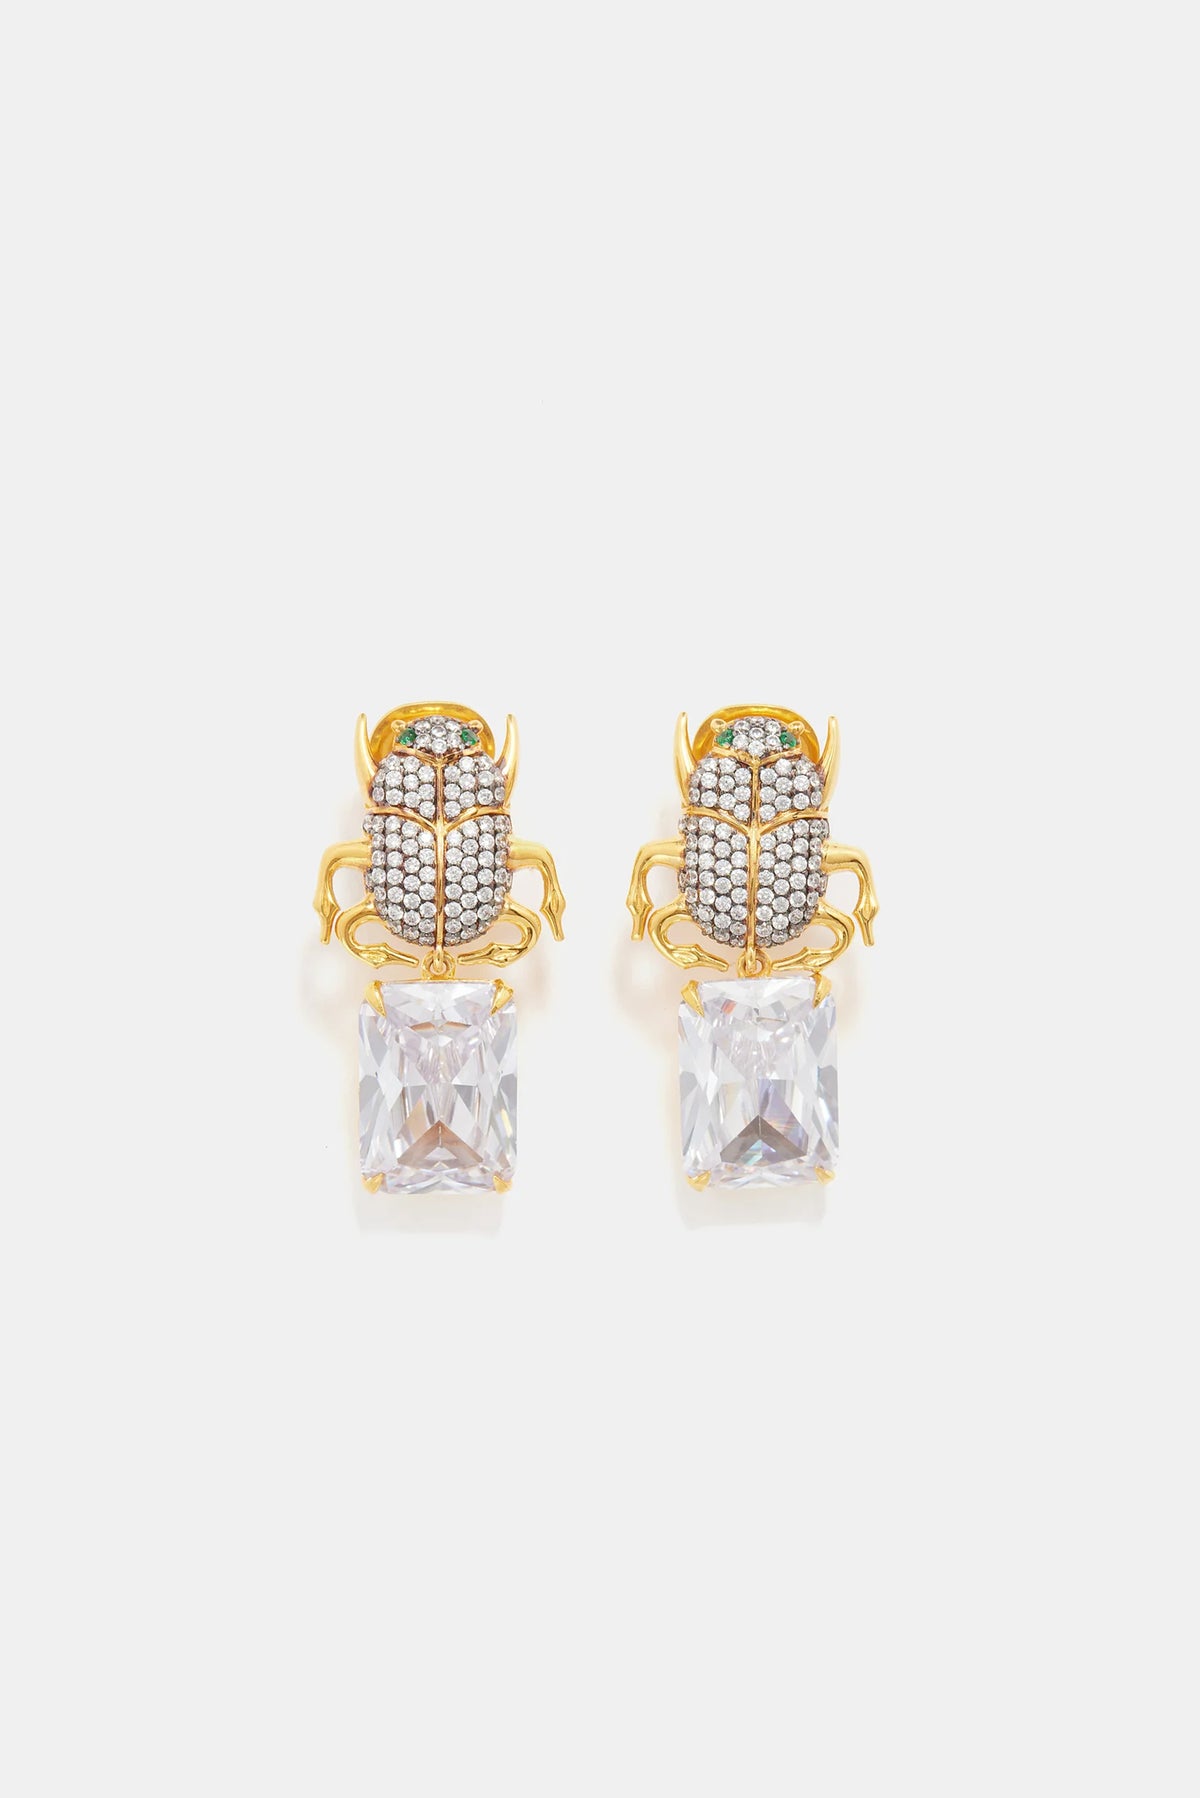 Begüm Khan Diamante Scarab Earrings